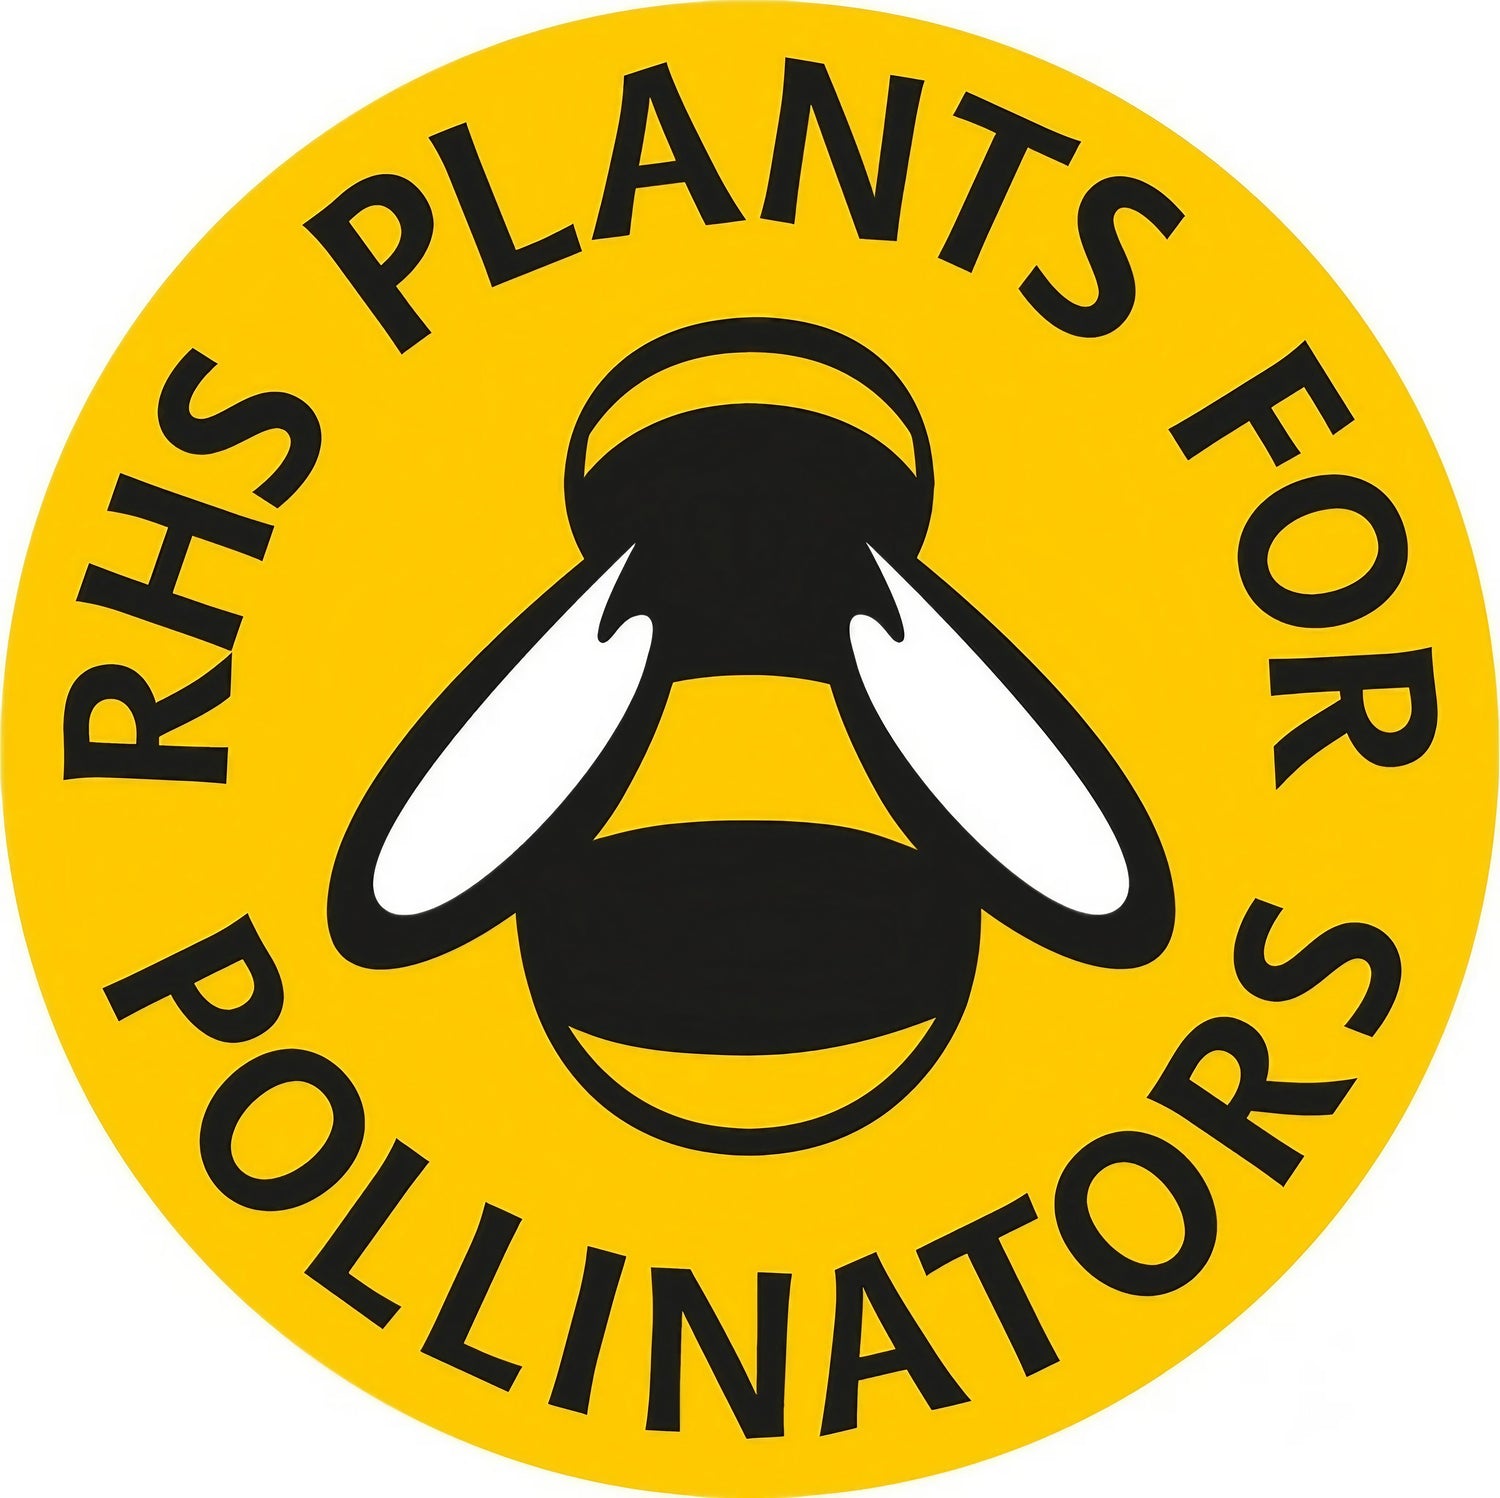 Certified RHS Plants for Pollinators emblem indicating Zinnia Green Envy&